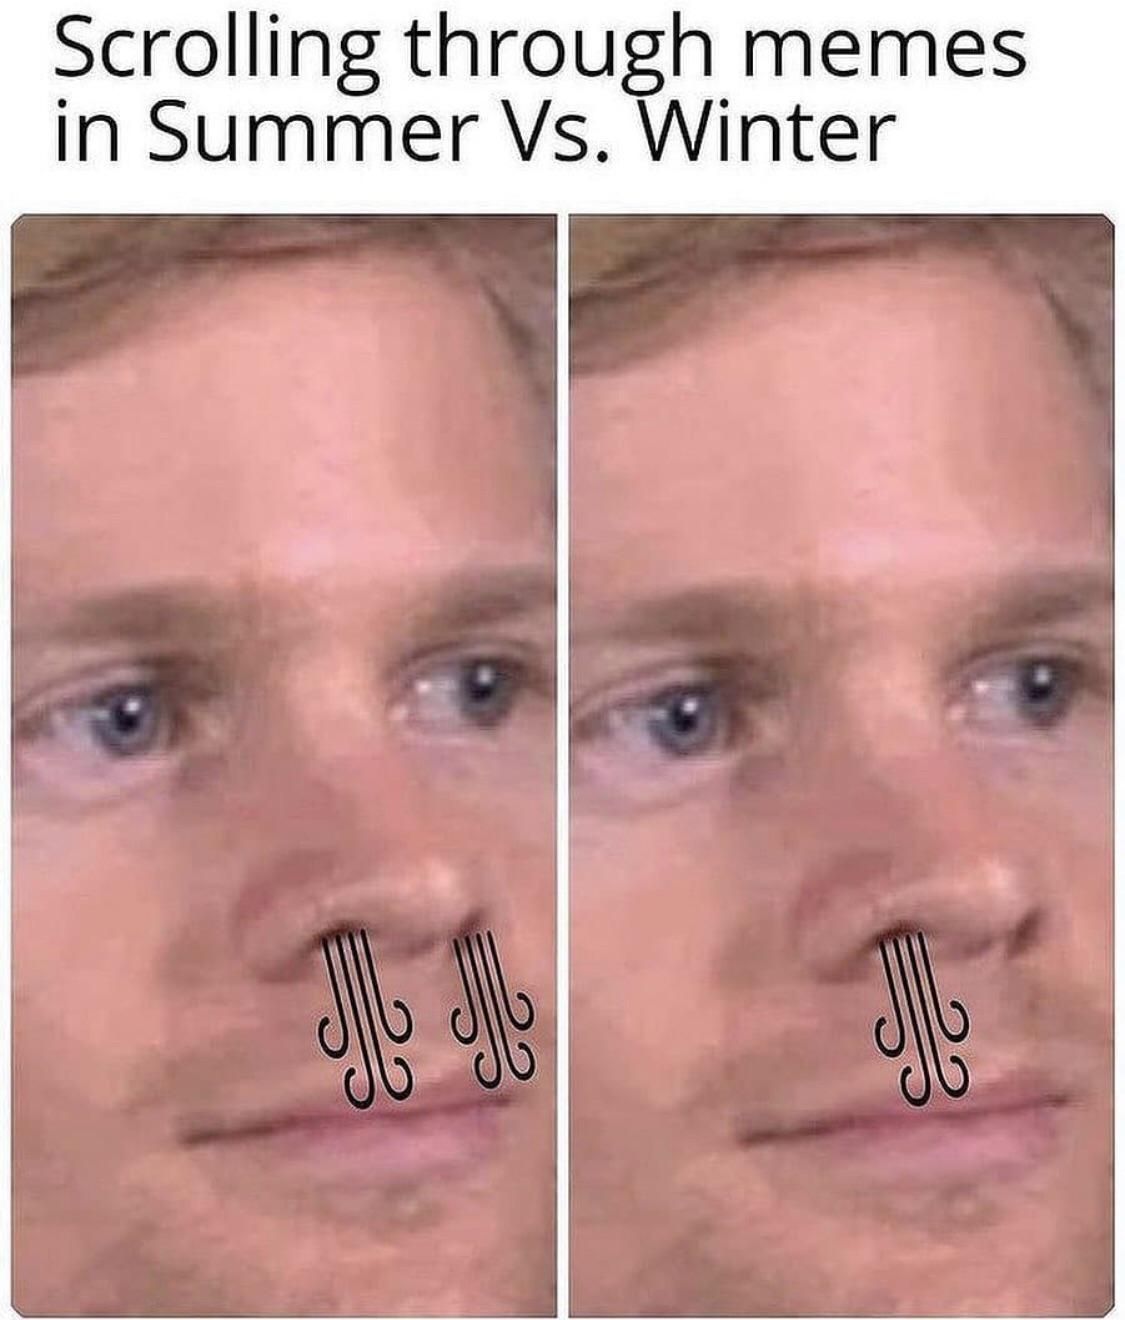 Scrolling through memes in Summer vs Winter.